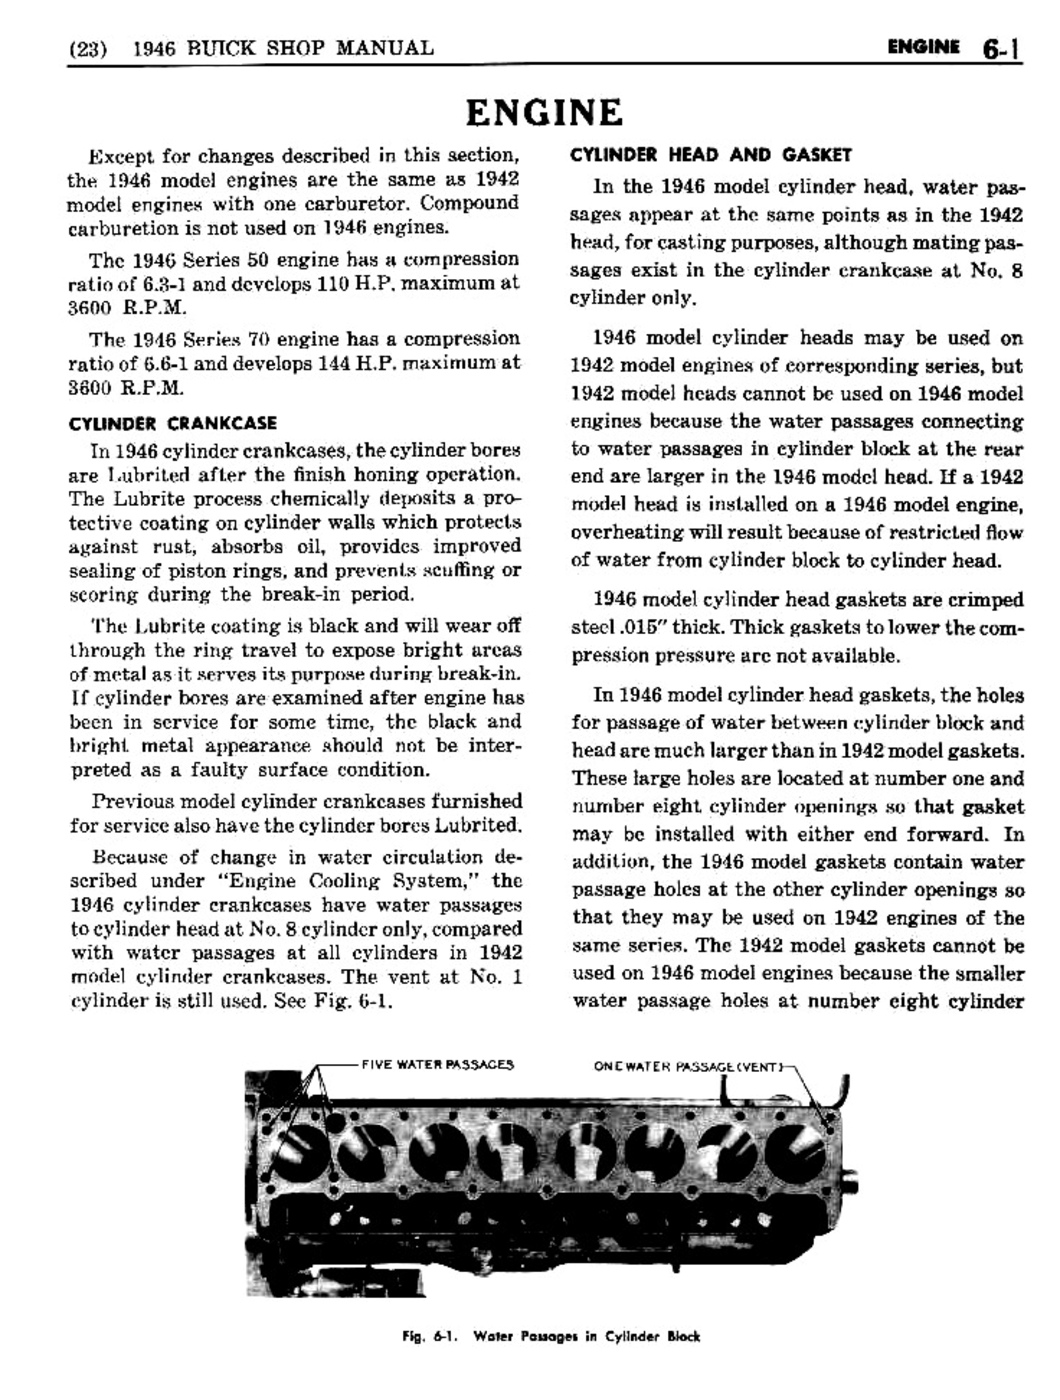 n_07 1946 Buick Shop Manual - Engine-001-001.jpg